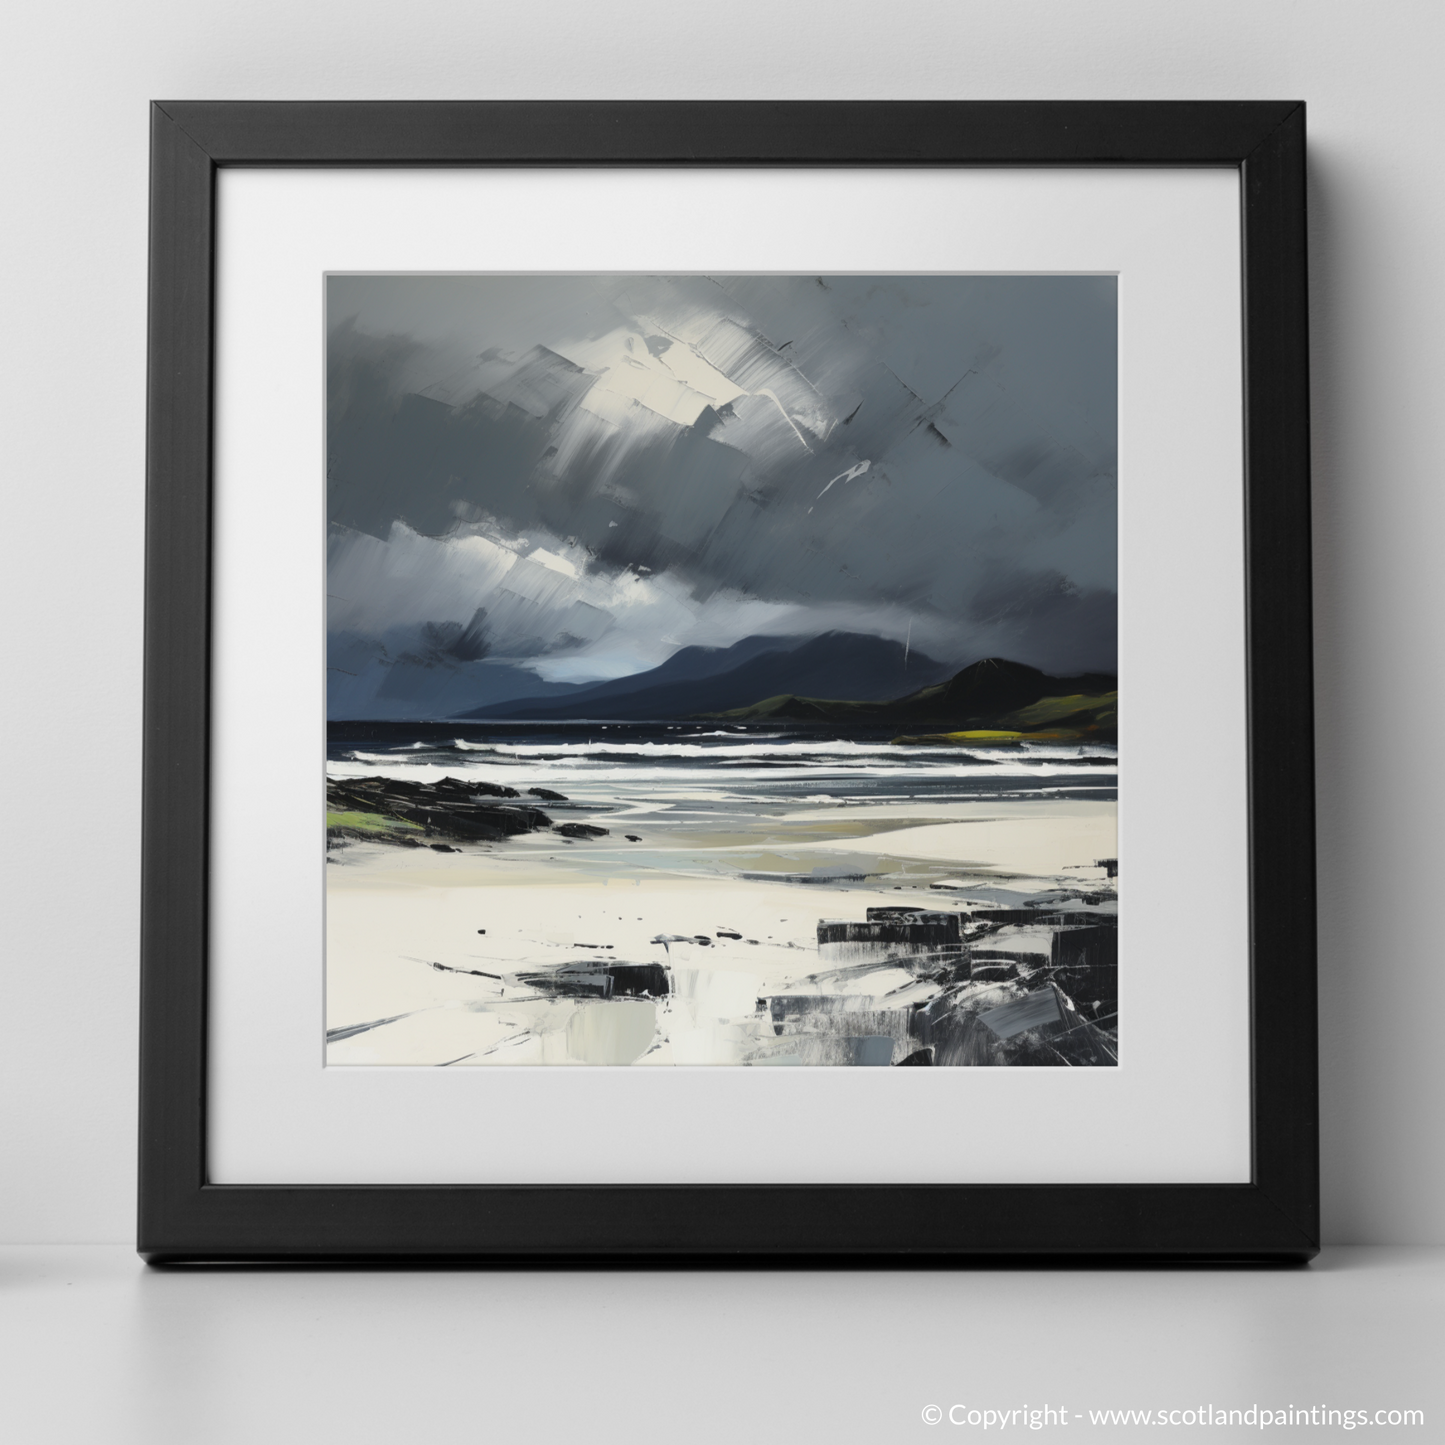 Art Print of Camusdarach Beach with a stormy sky with a black frame